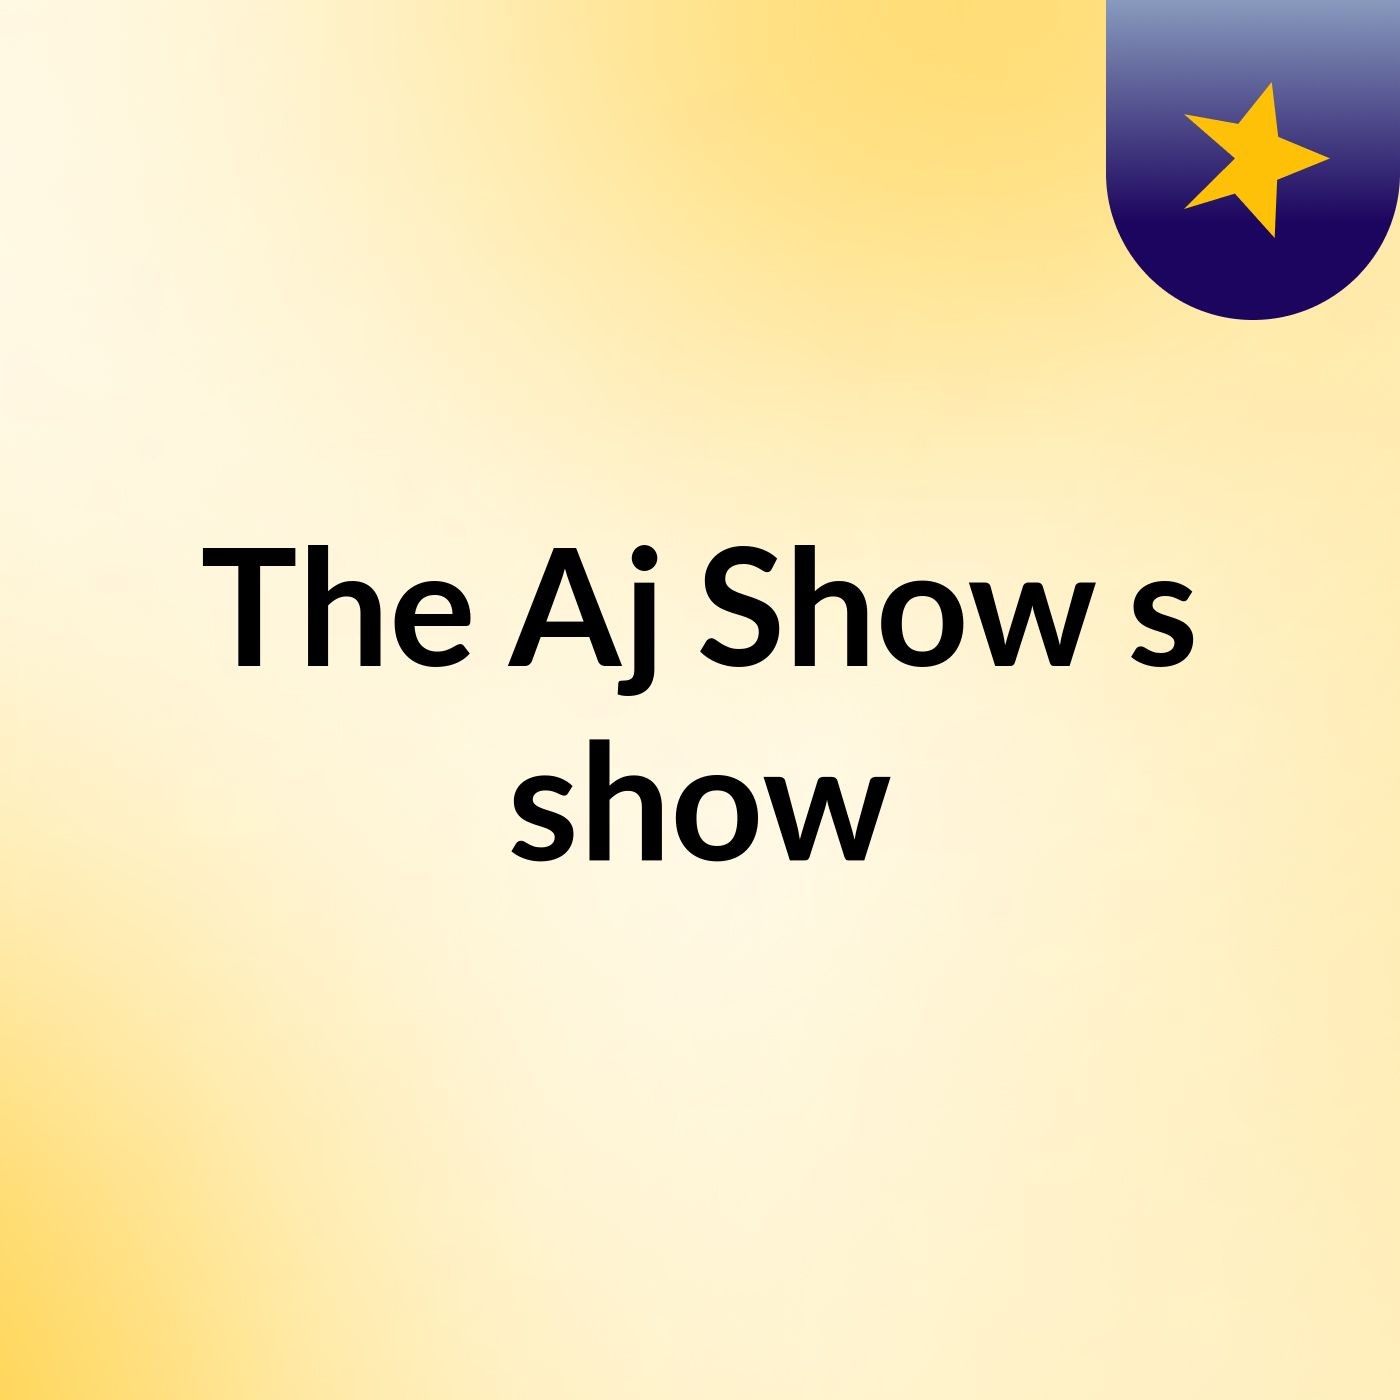 Episode 2 - The Aj Show's show